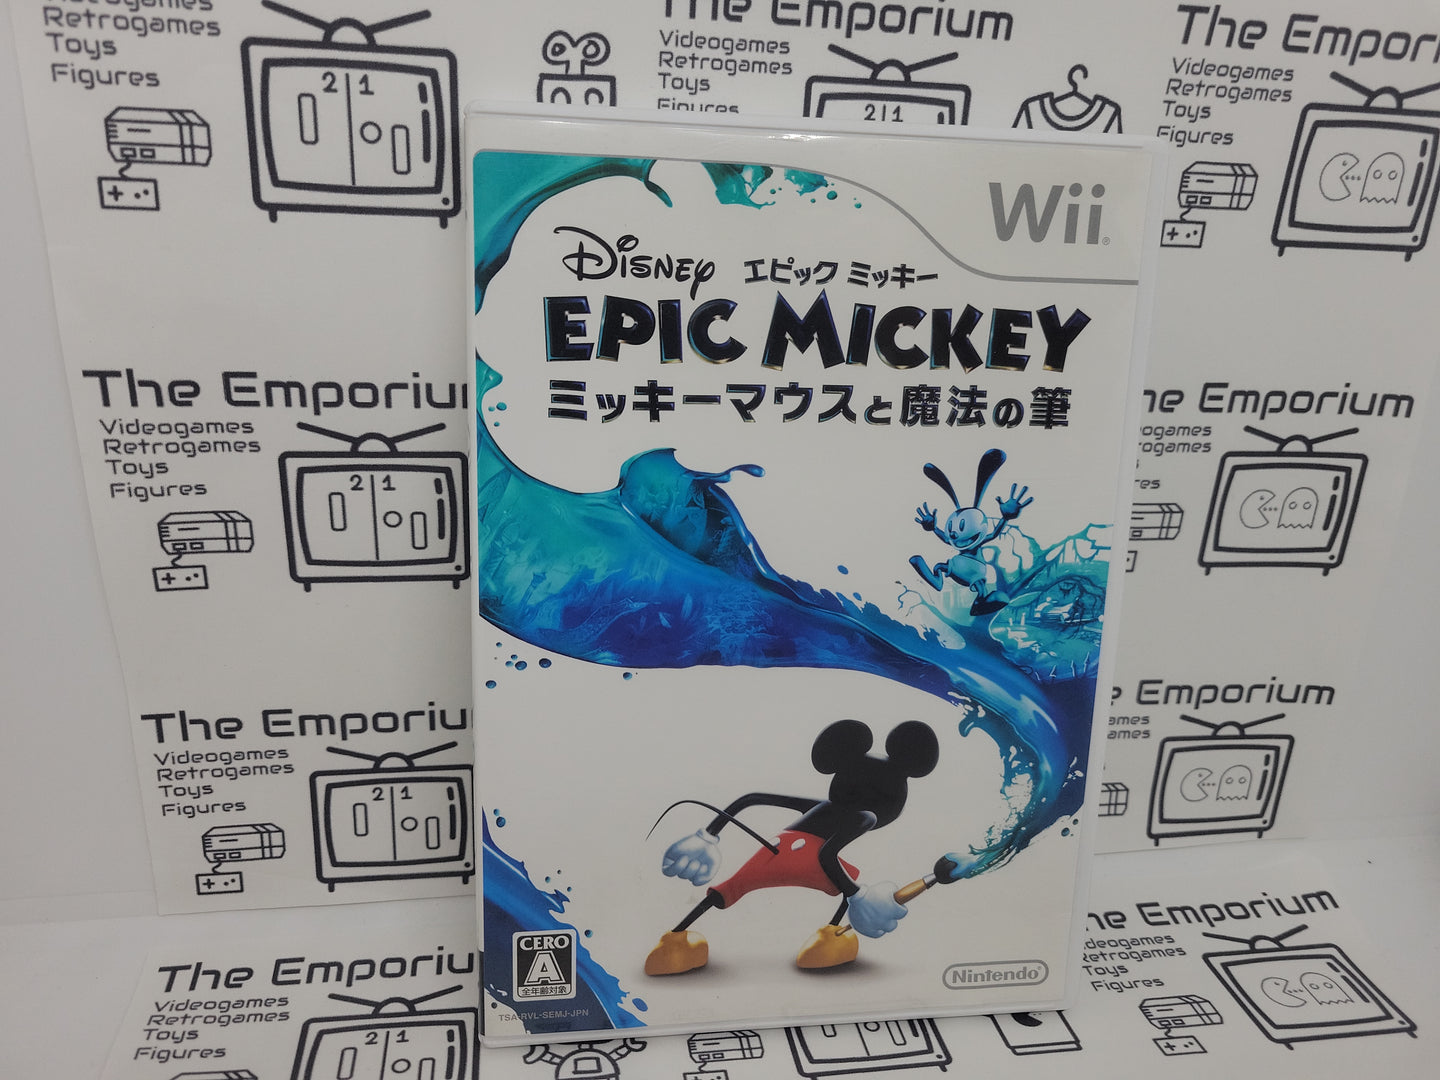 Epic Mickey - Nintendo Wii